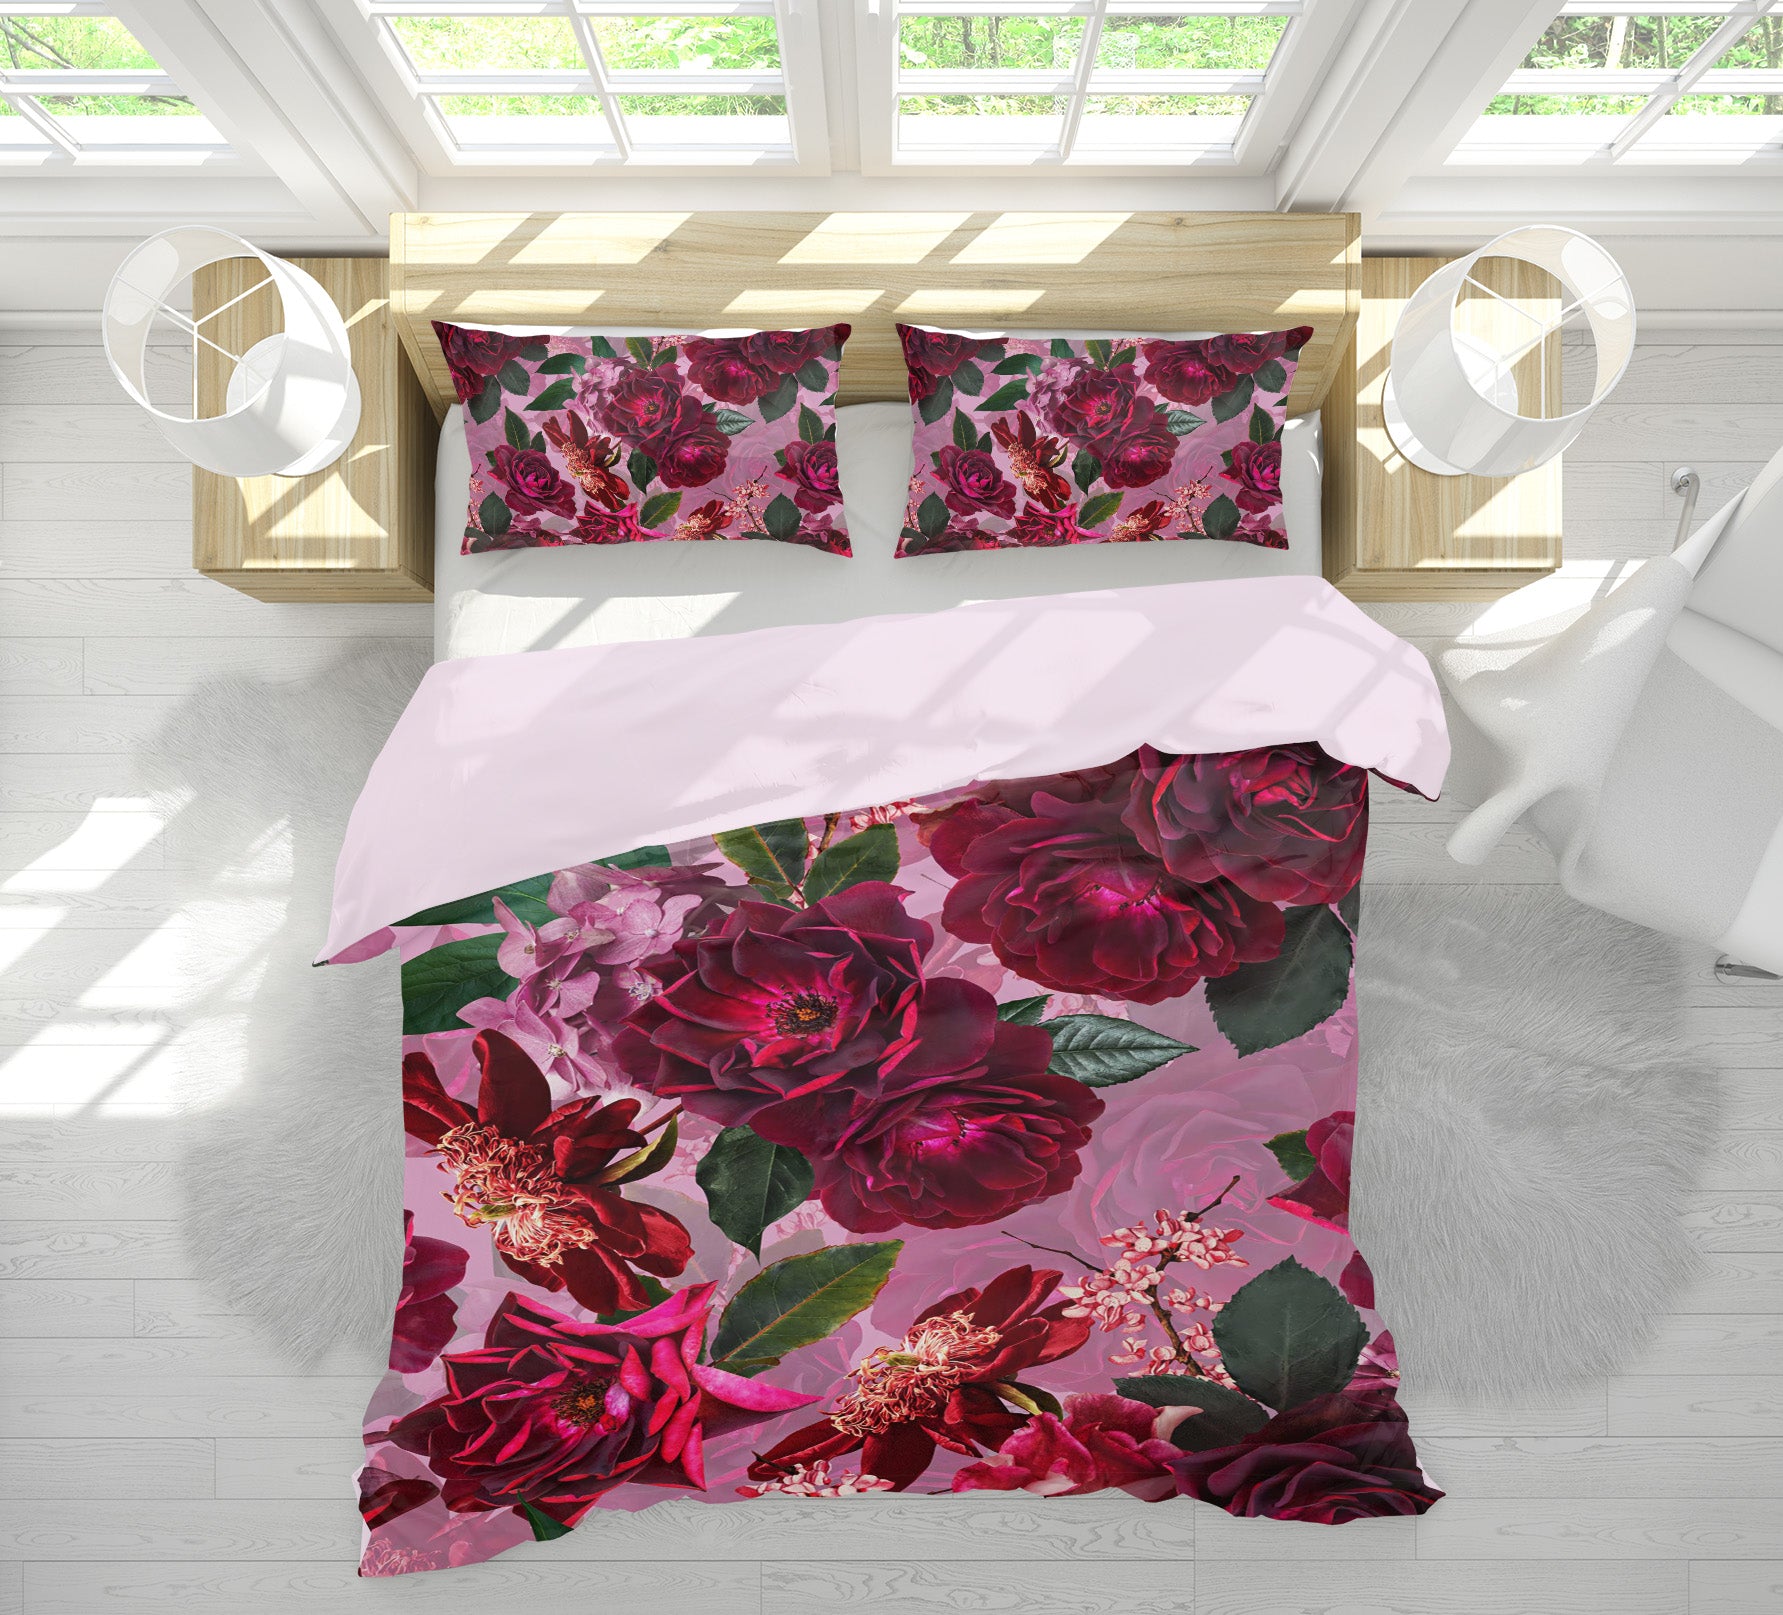 3D Rose Fragrance 120 Uta Naumann Bedding Bed Pillowcases Quilt